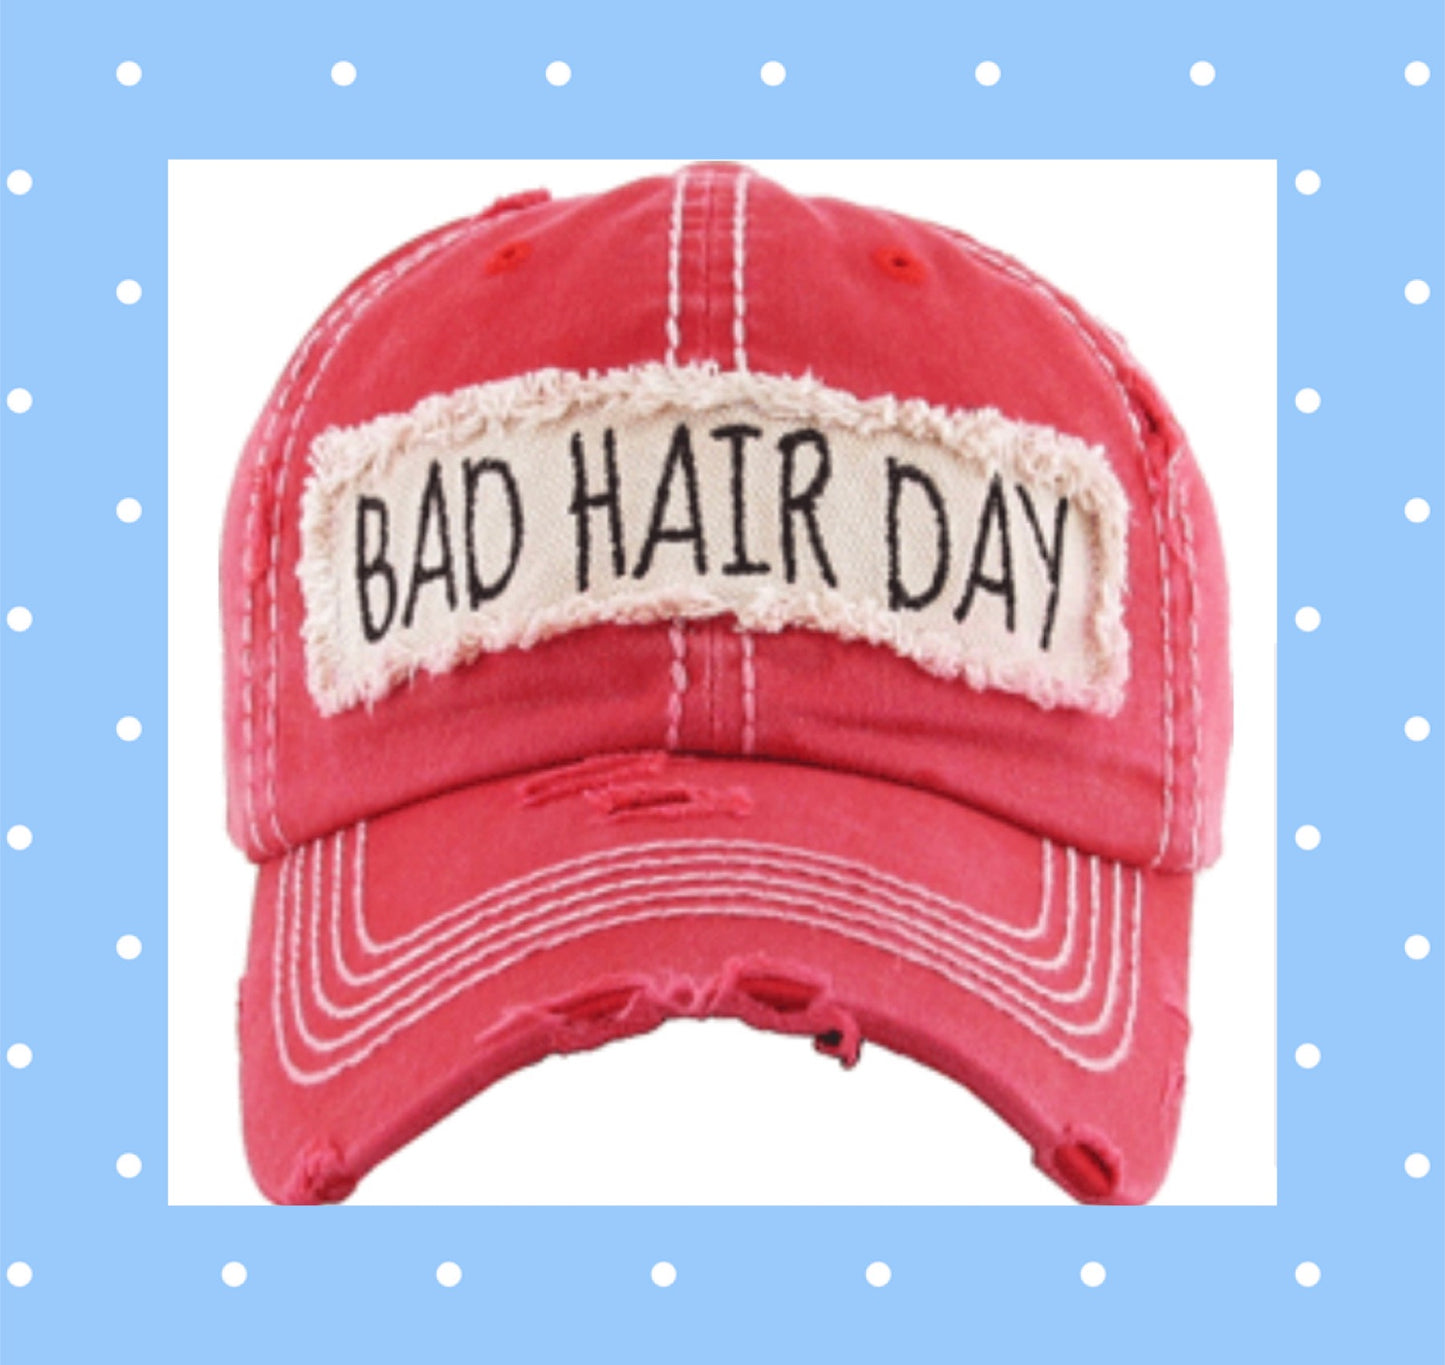 Distressed Bad Hair Day hat, baseball cap, 3 colors